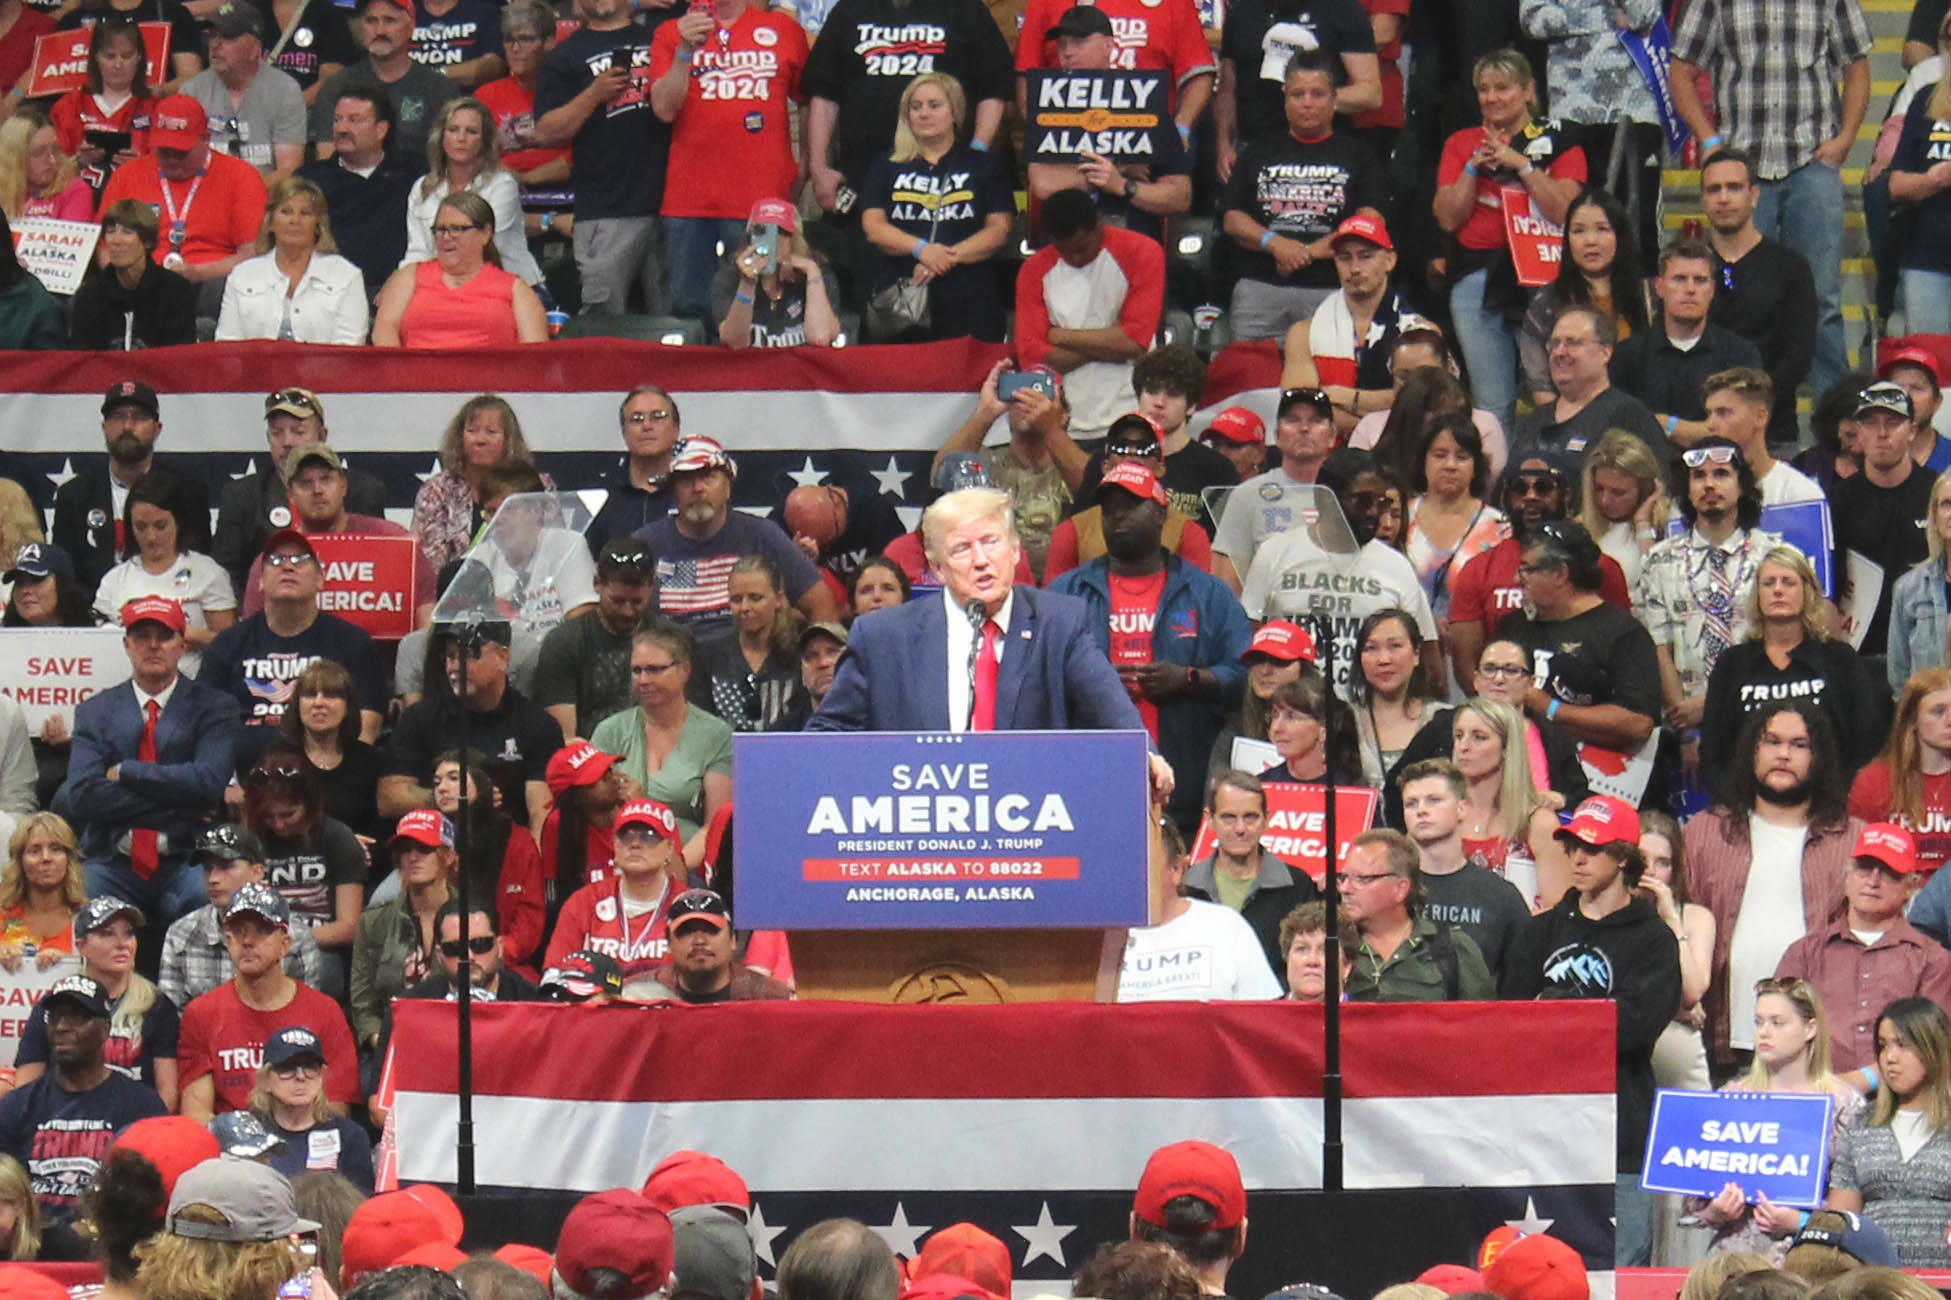 Donald Trump addresses attendees at a Save America rally on Saturday, July 9, 2022, in Anchorage, Alaska. (Ashlyn O’Hara/Peninsula Clarion)